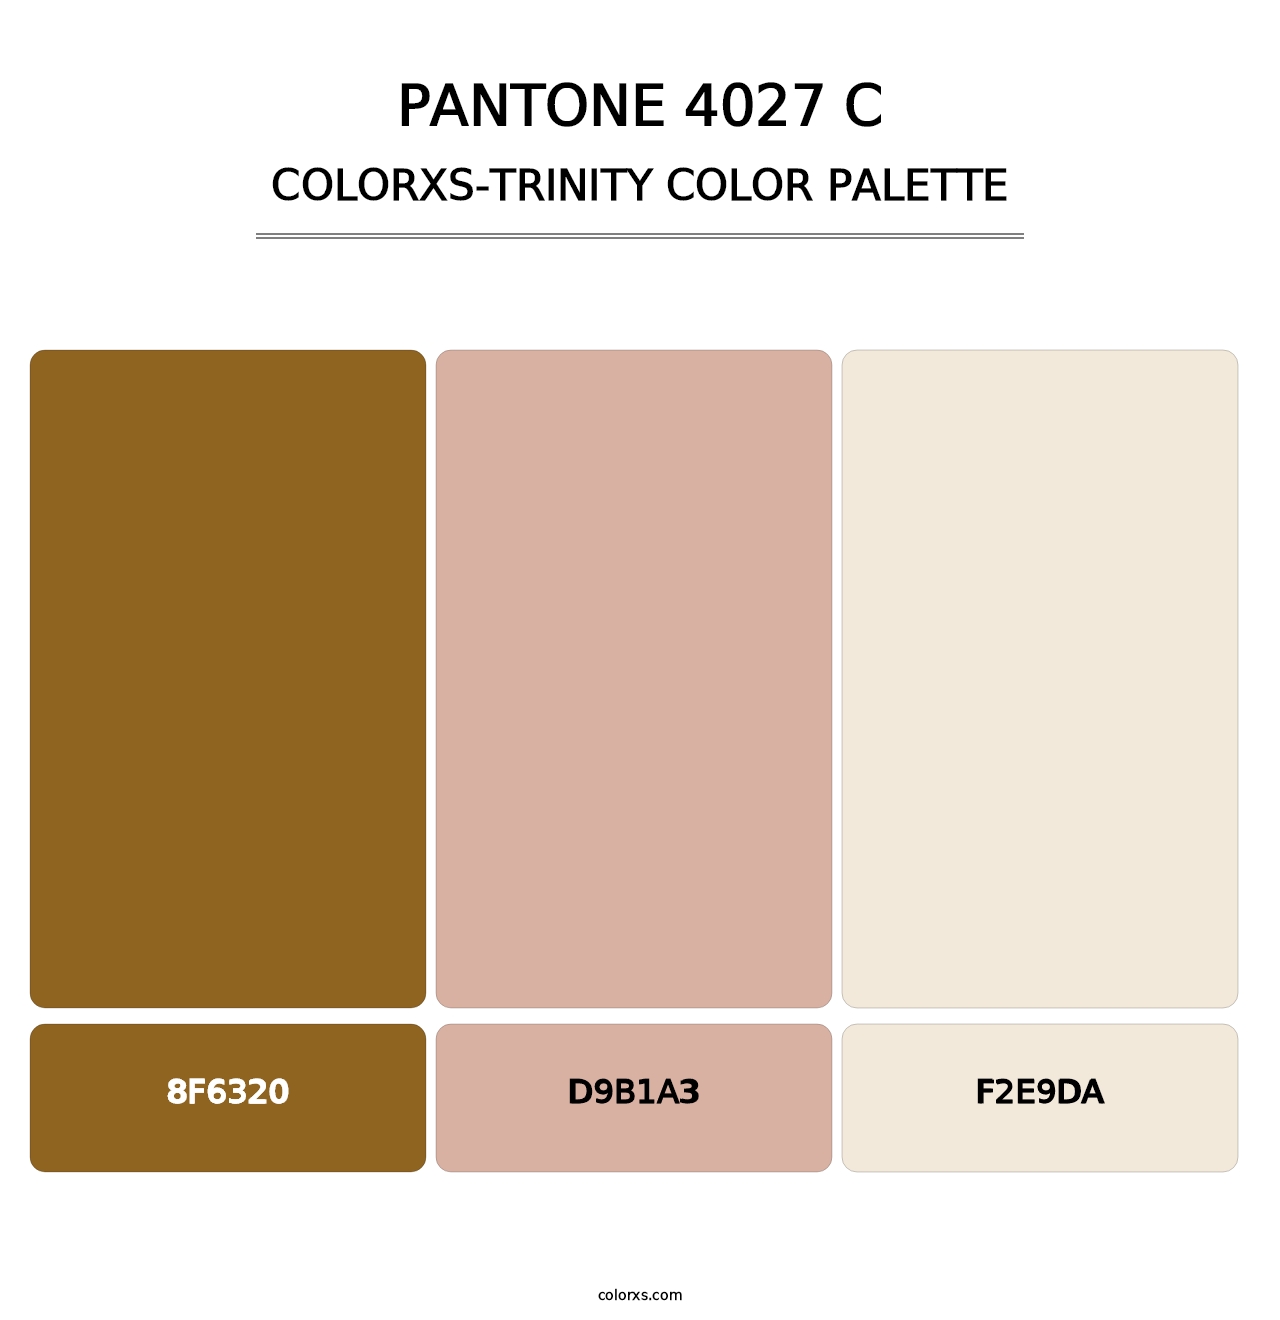 PANTONE 4027 C - Colorxs Trinity Palette